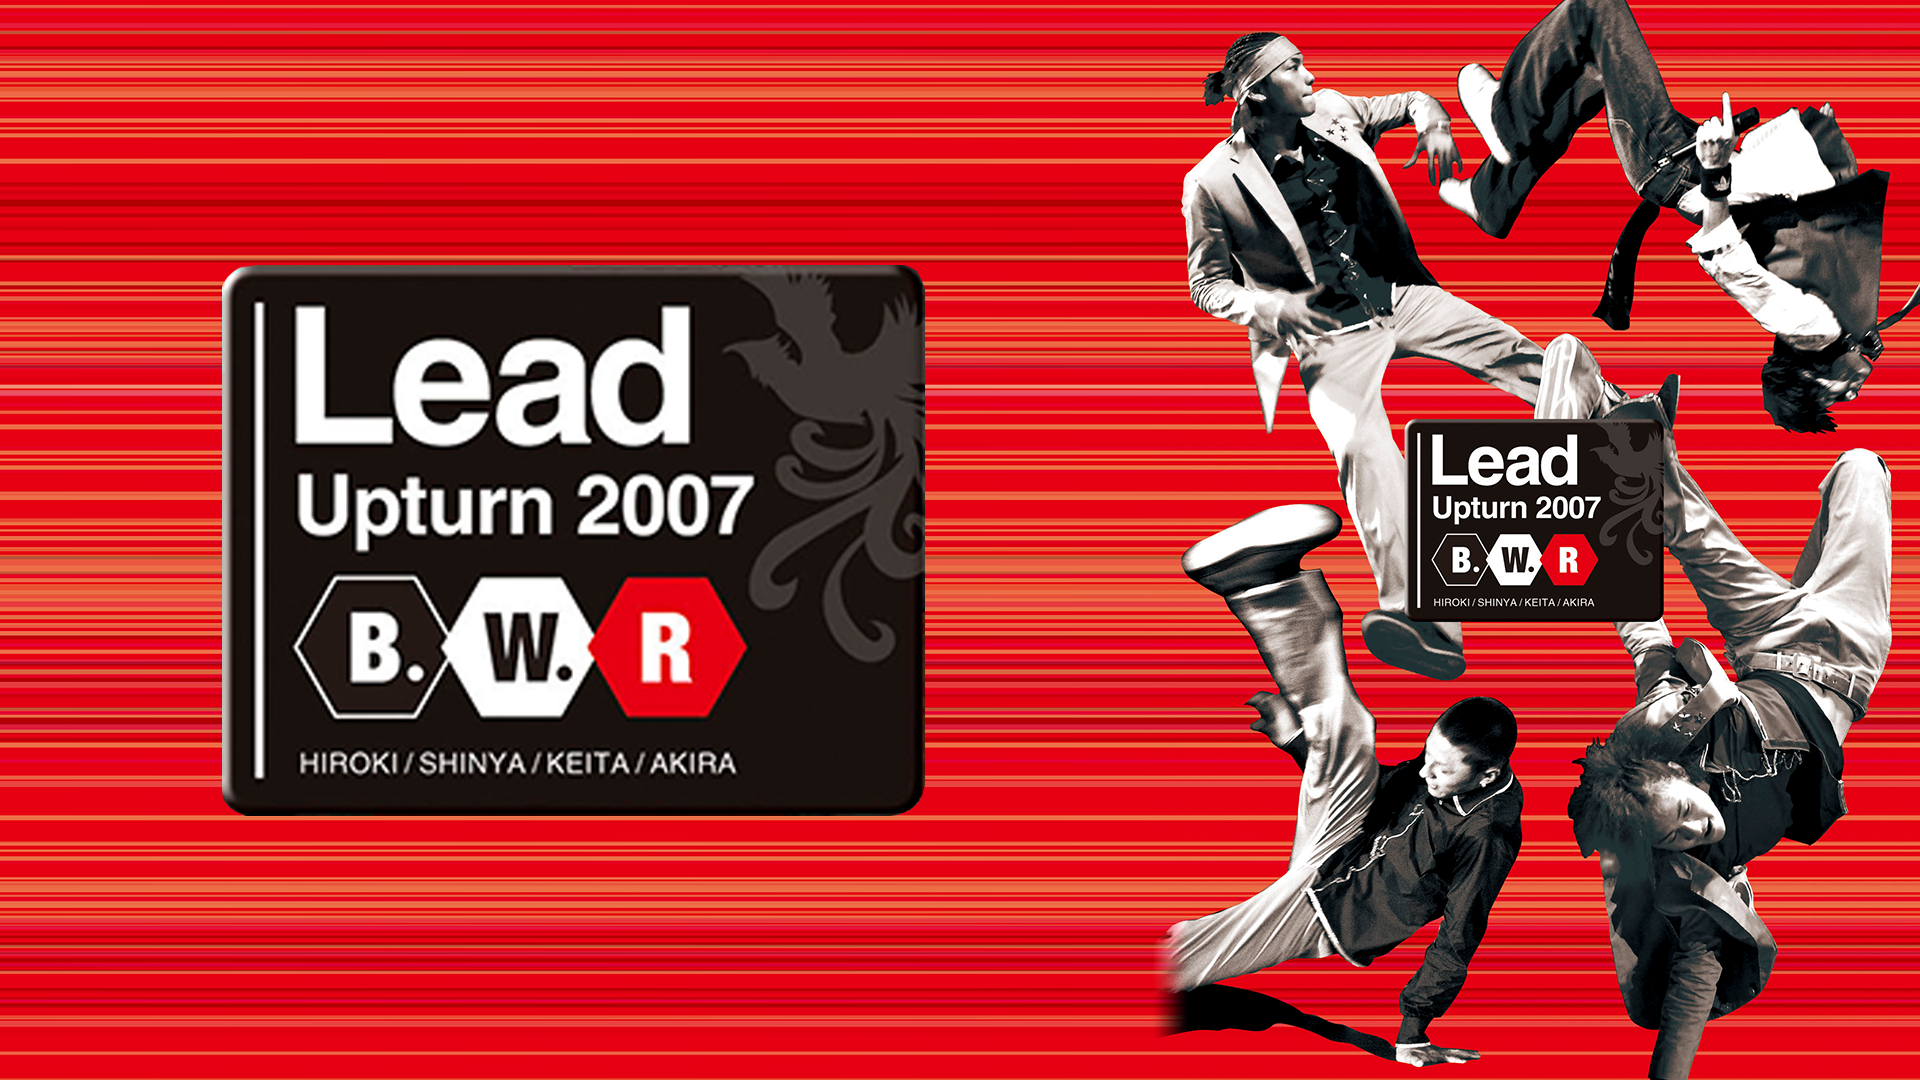 Lead Upturn 2007 -B.W.R-(音楽・ライブ / 2007) - 動画配信 | U-NEXT 31日間無料トライアル